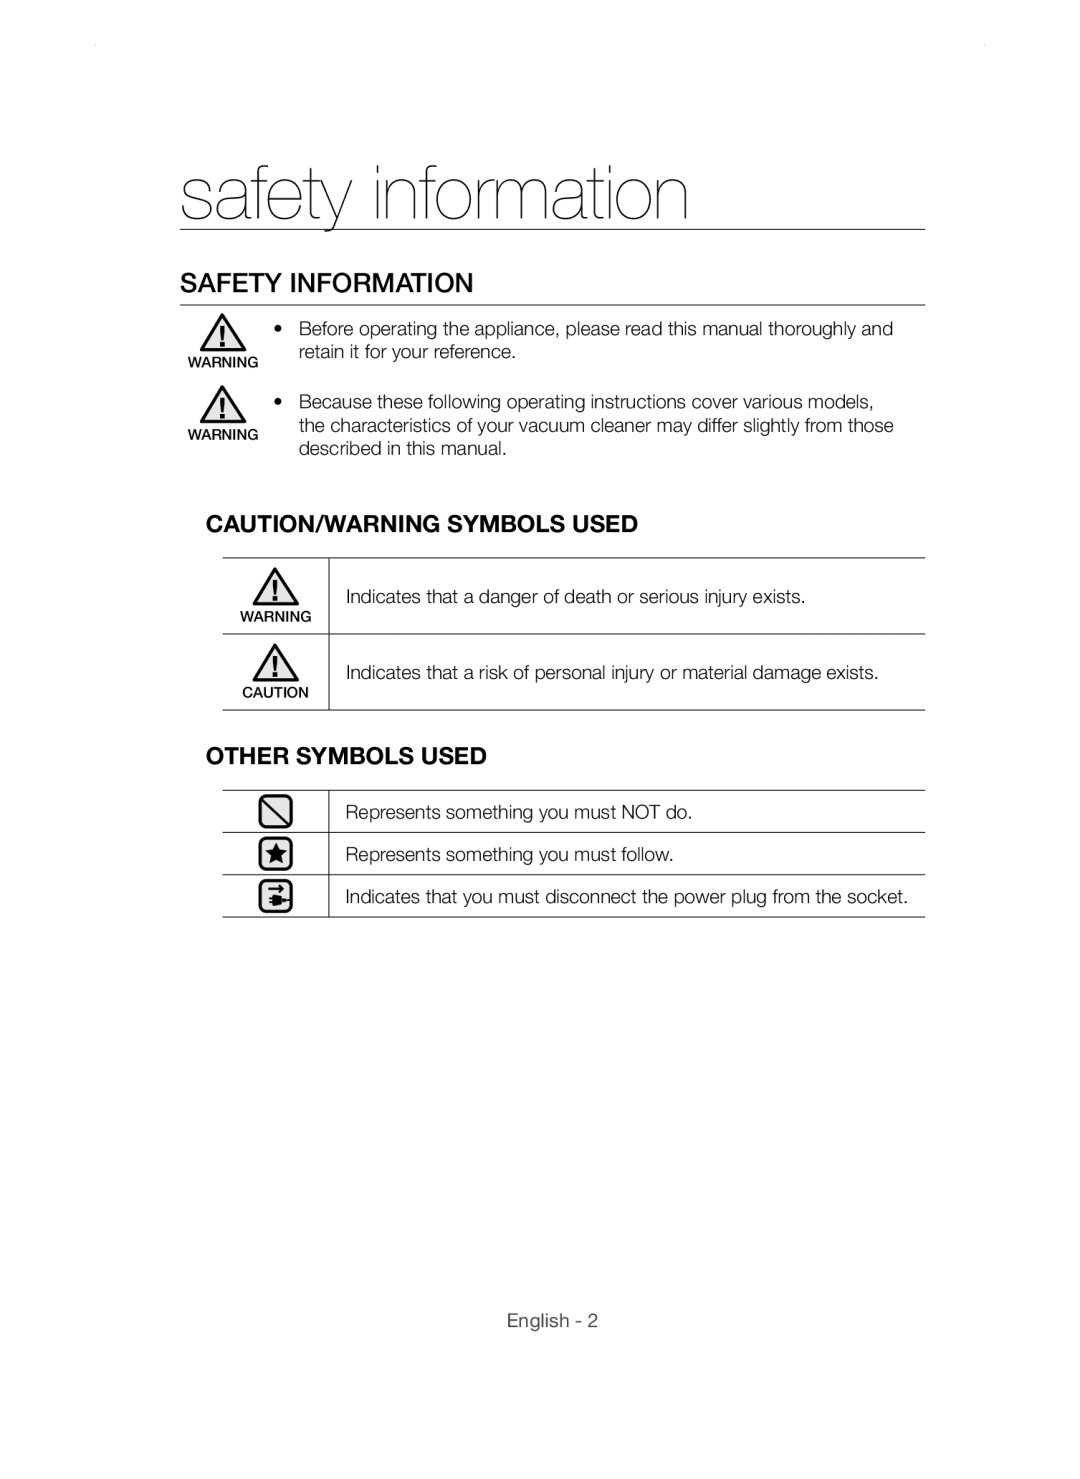 Samsung VC20AHNDC6B/TR safety information, Safety Information, Caution/Warning Symbols Used, Other Symbols Used, English 